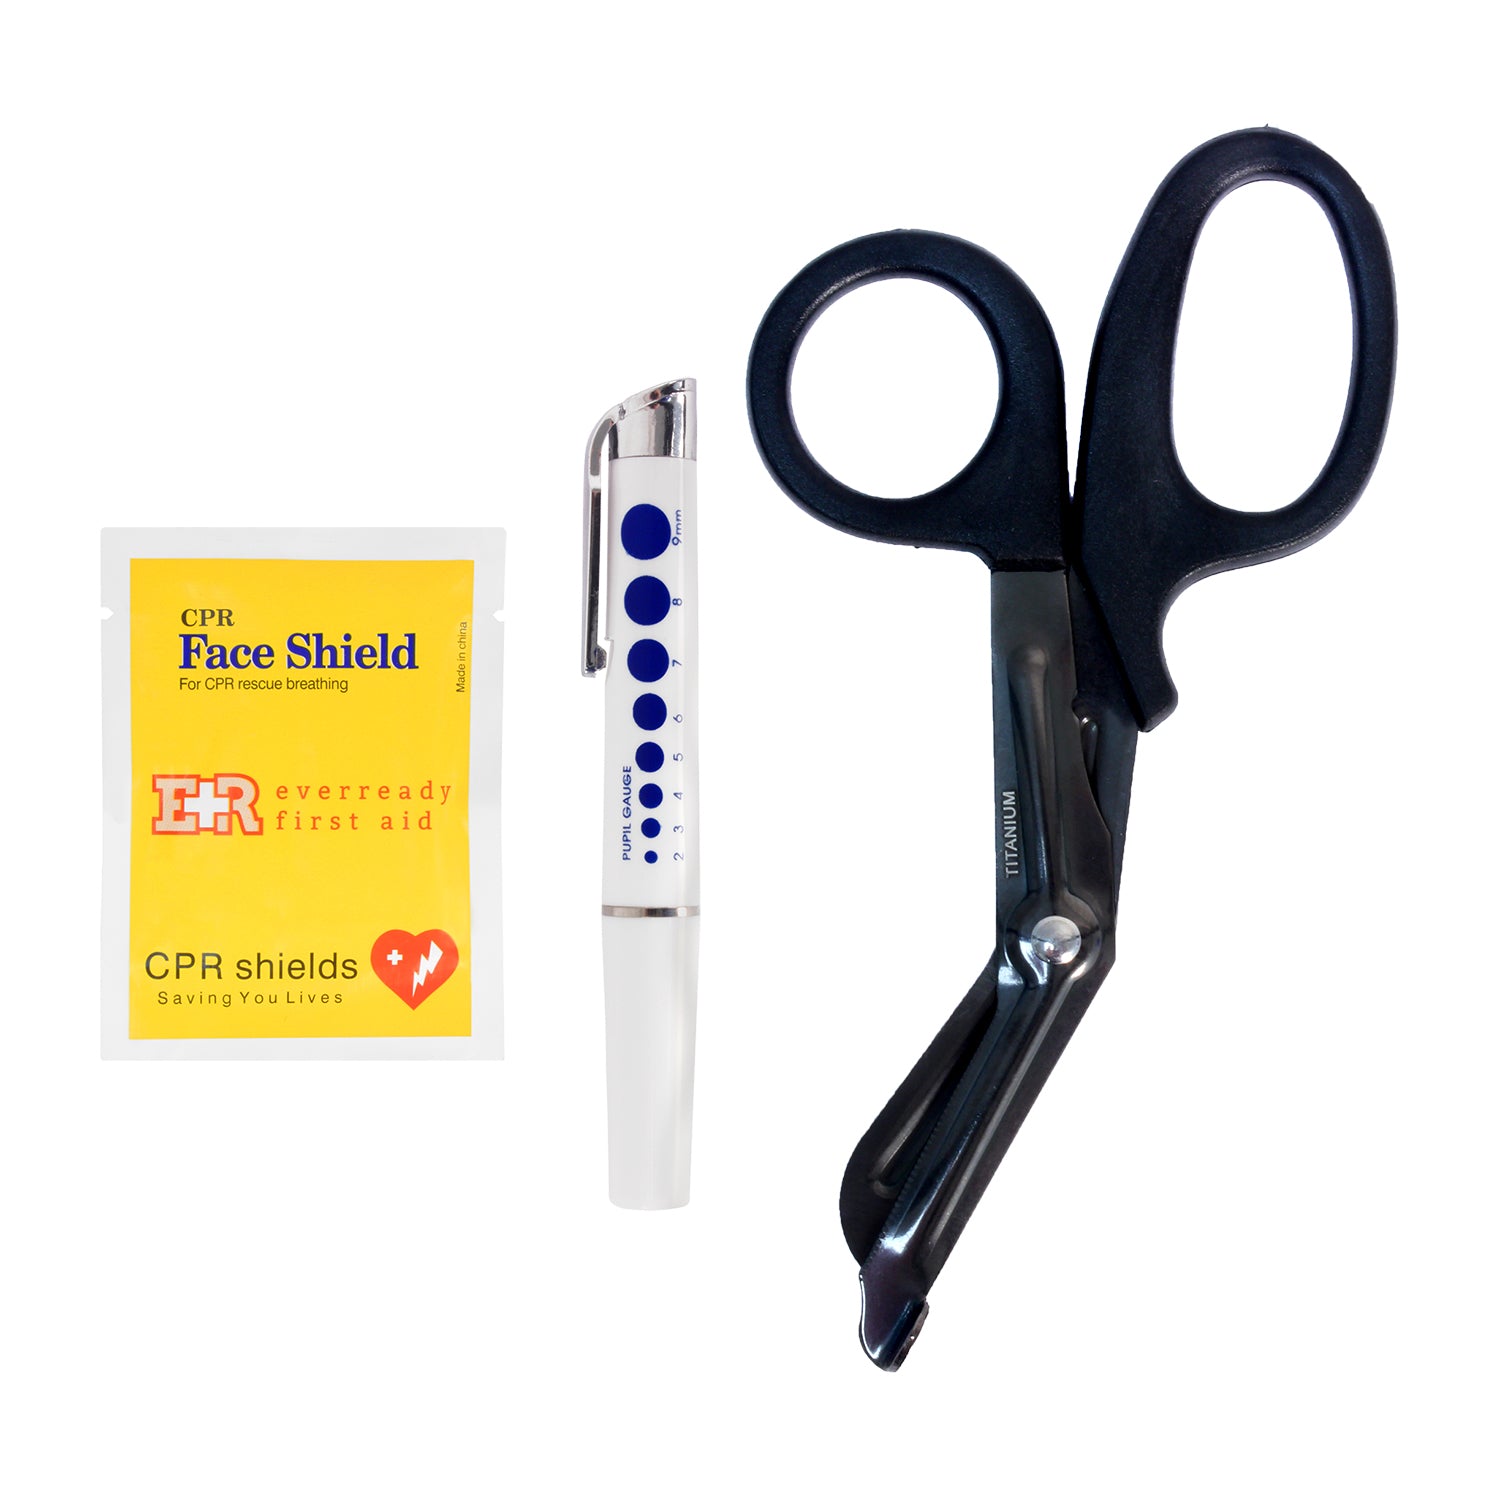 MediTac Titanium Bonded Bandage Shears, Reusable White LED Pen Light, & CPR Face Shield